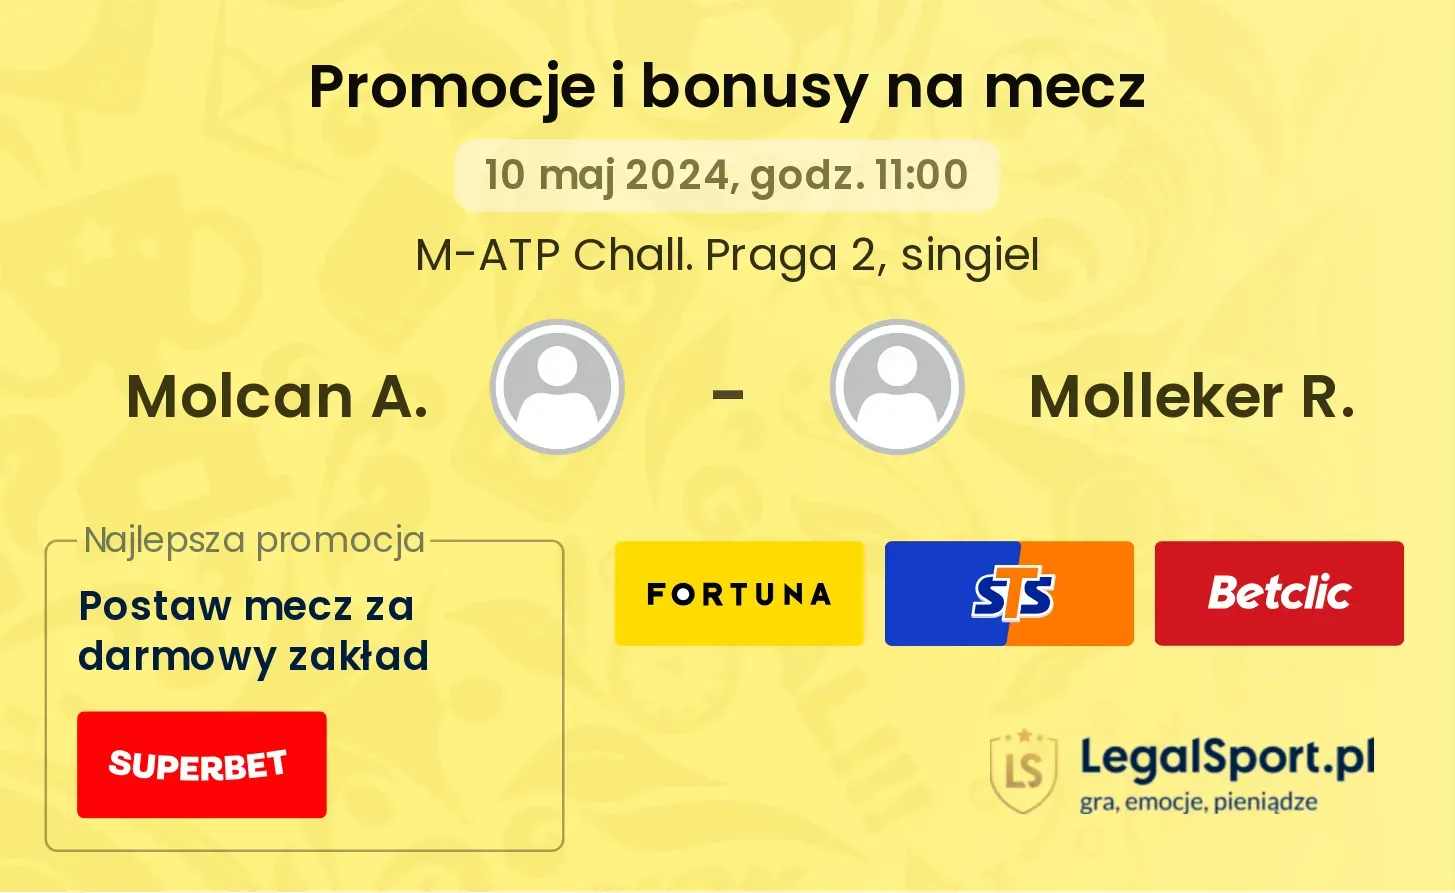 Molcan A. - Molleker R. promocje bonusy na mecz